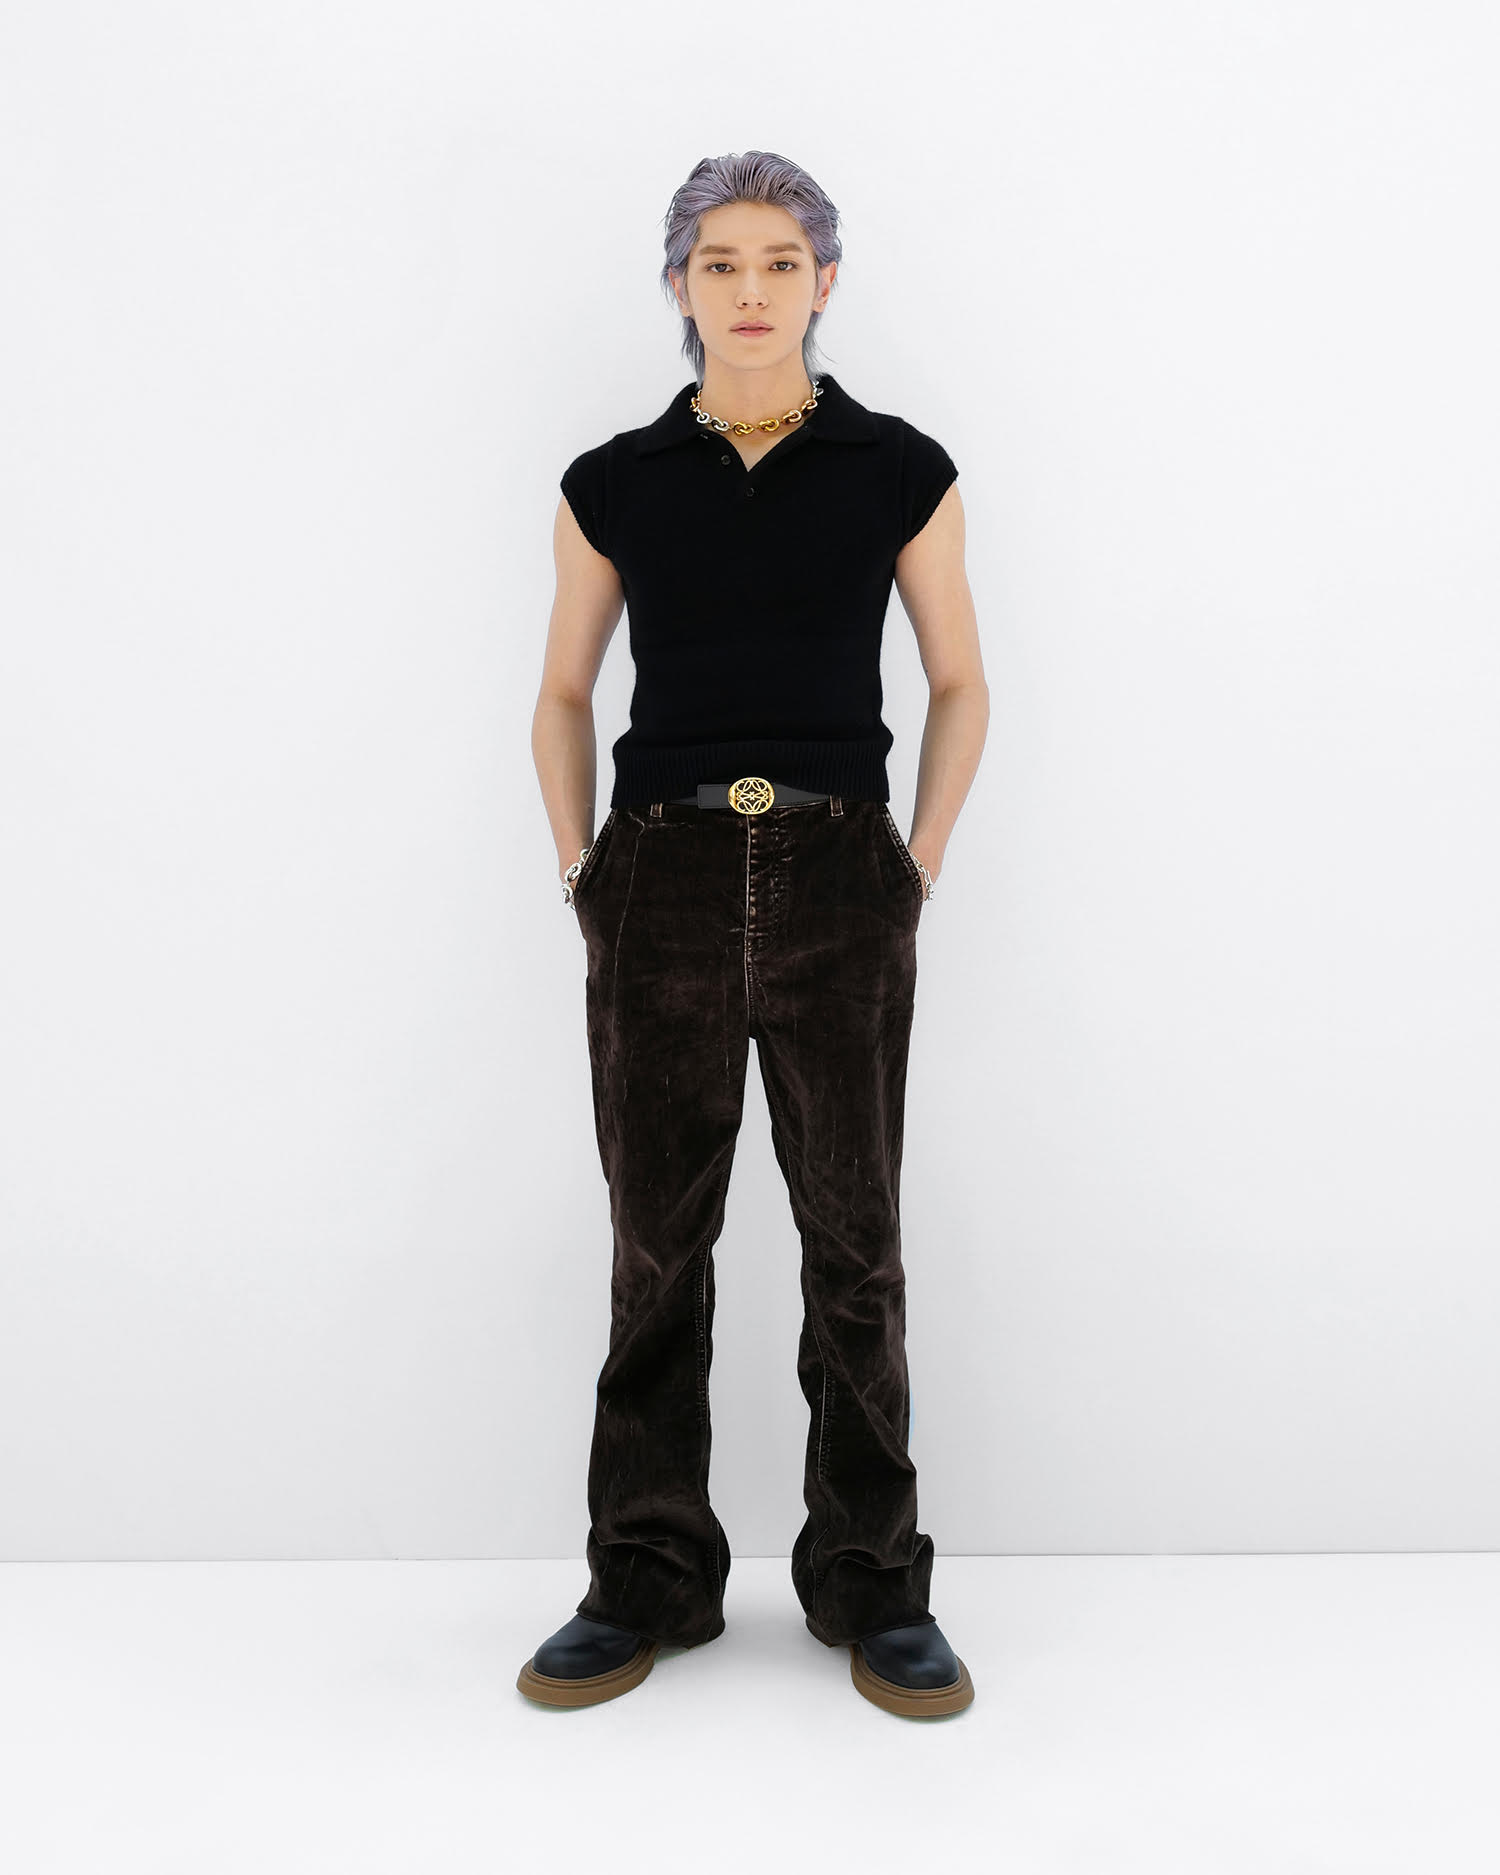 Taeyong, new LOEWE Global Brand Ambassador 2023